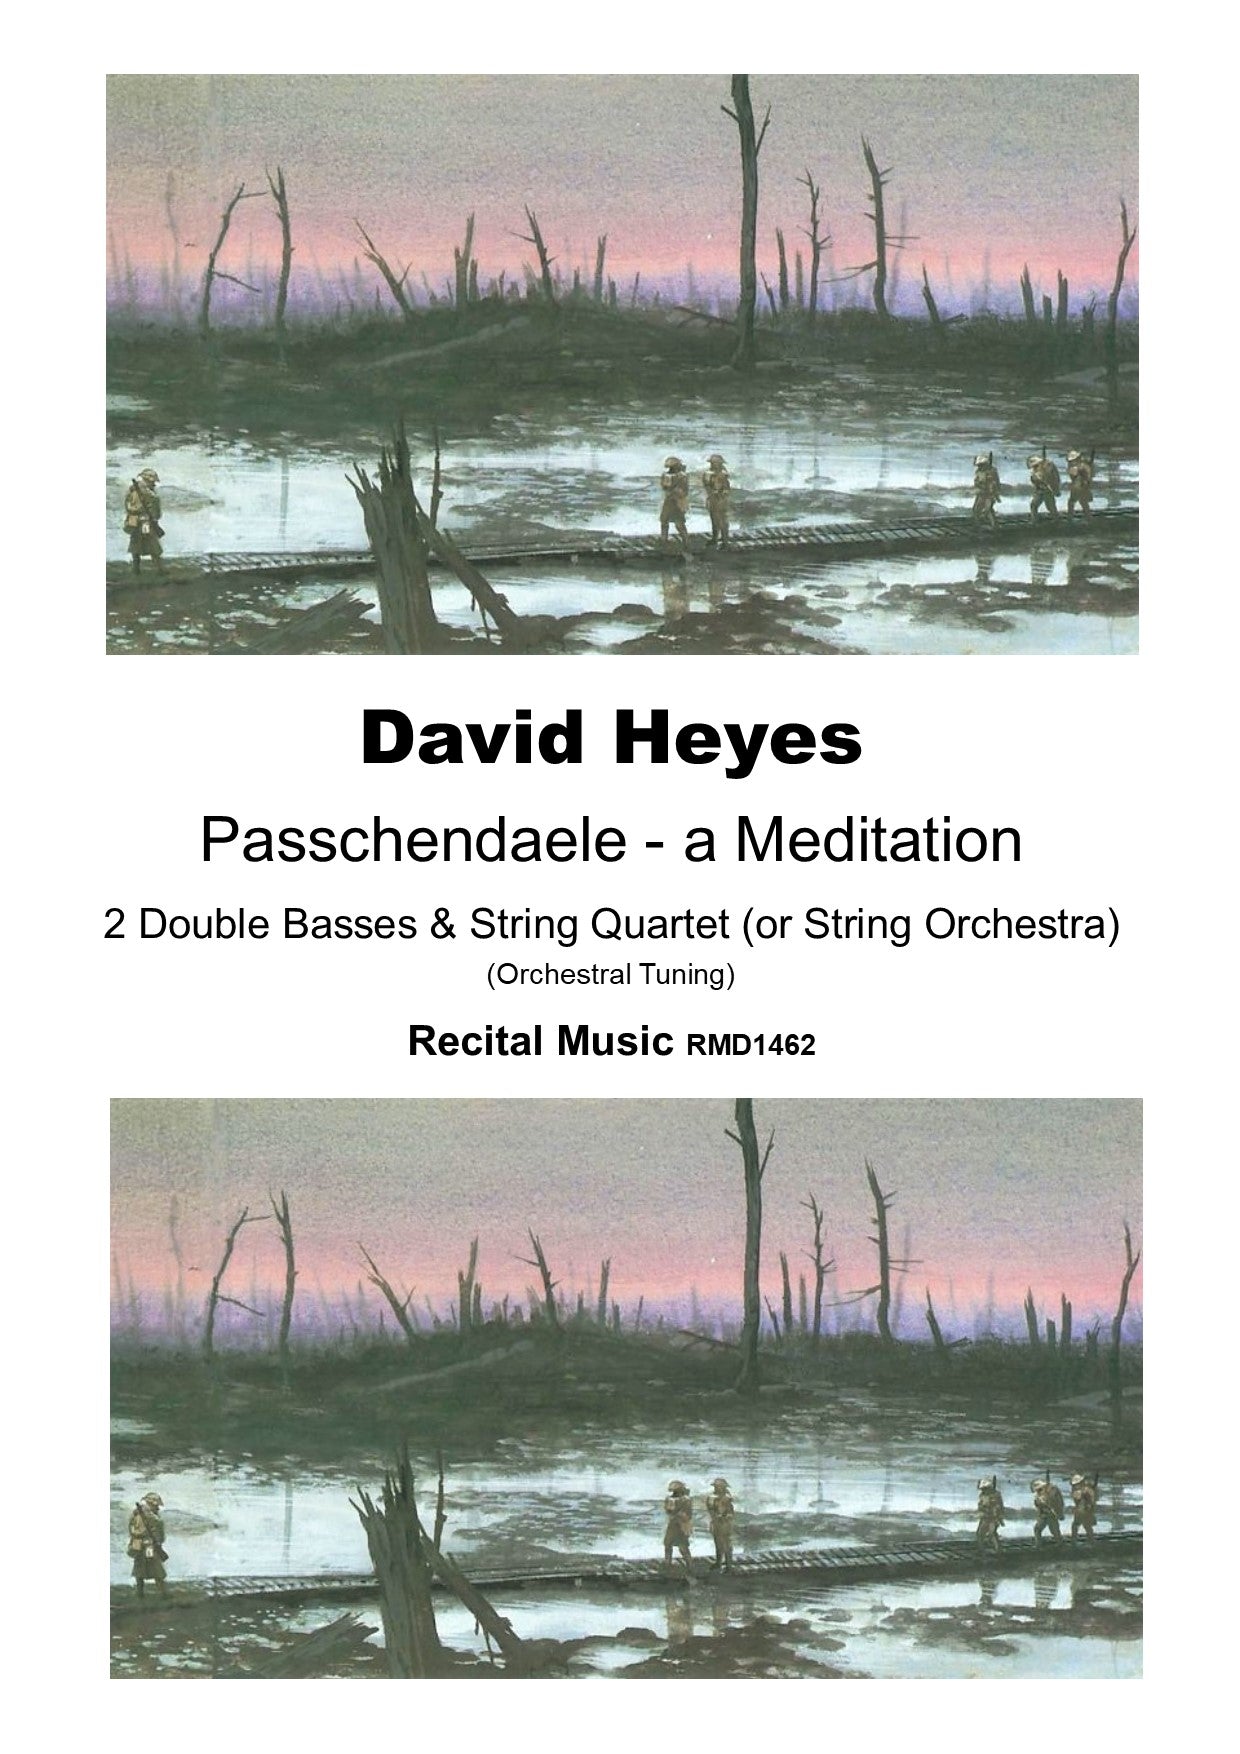 David Heyes: Passchendaele - a Meditation for 2 double basses & string quartet